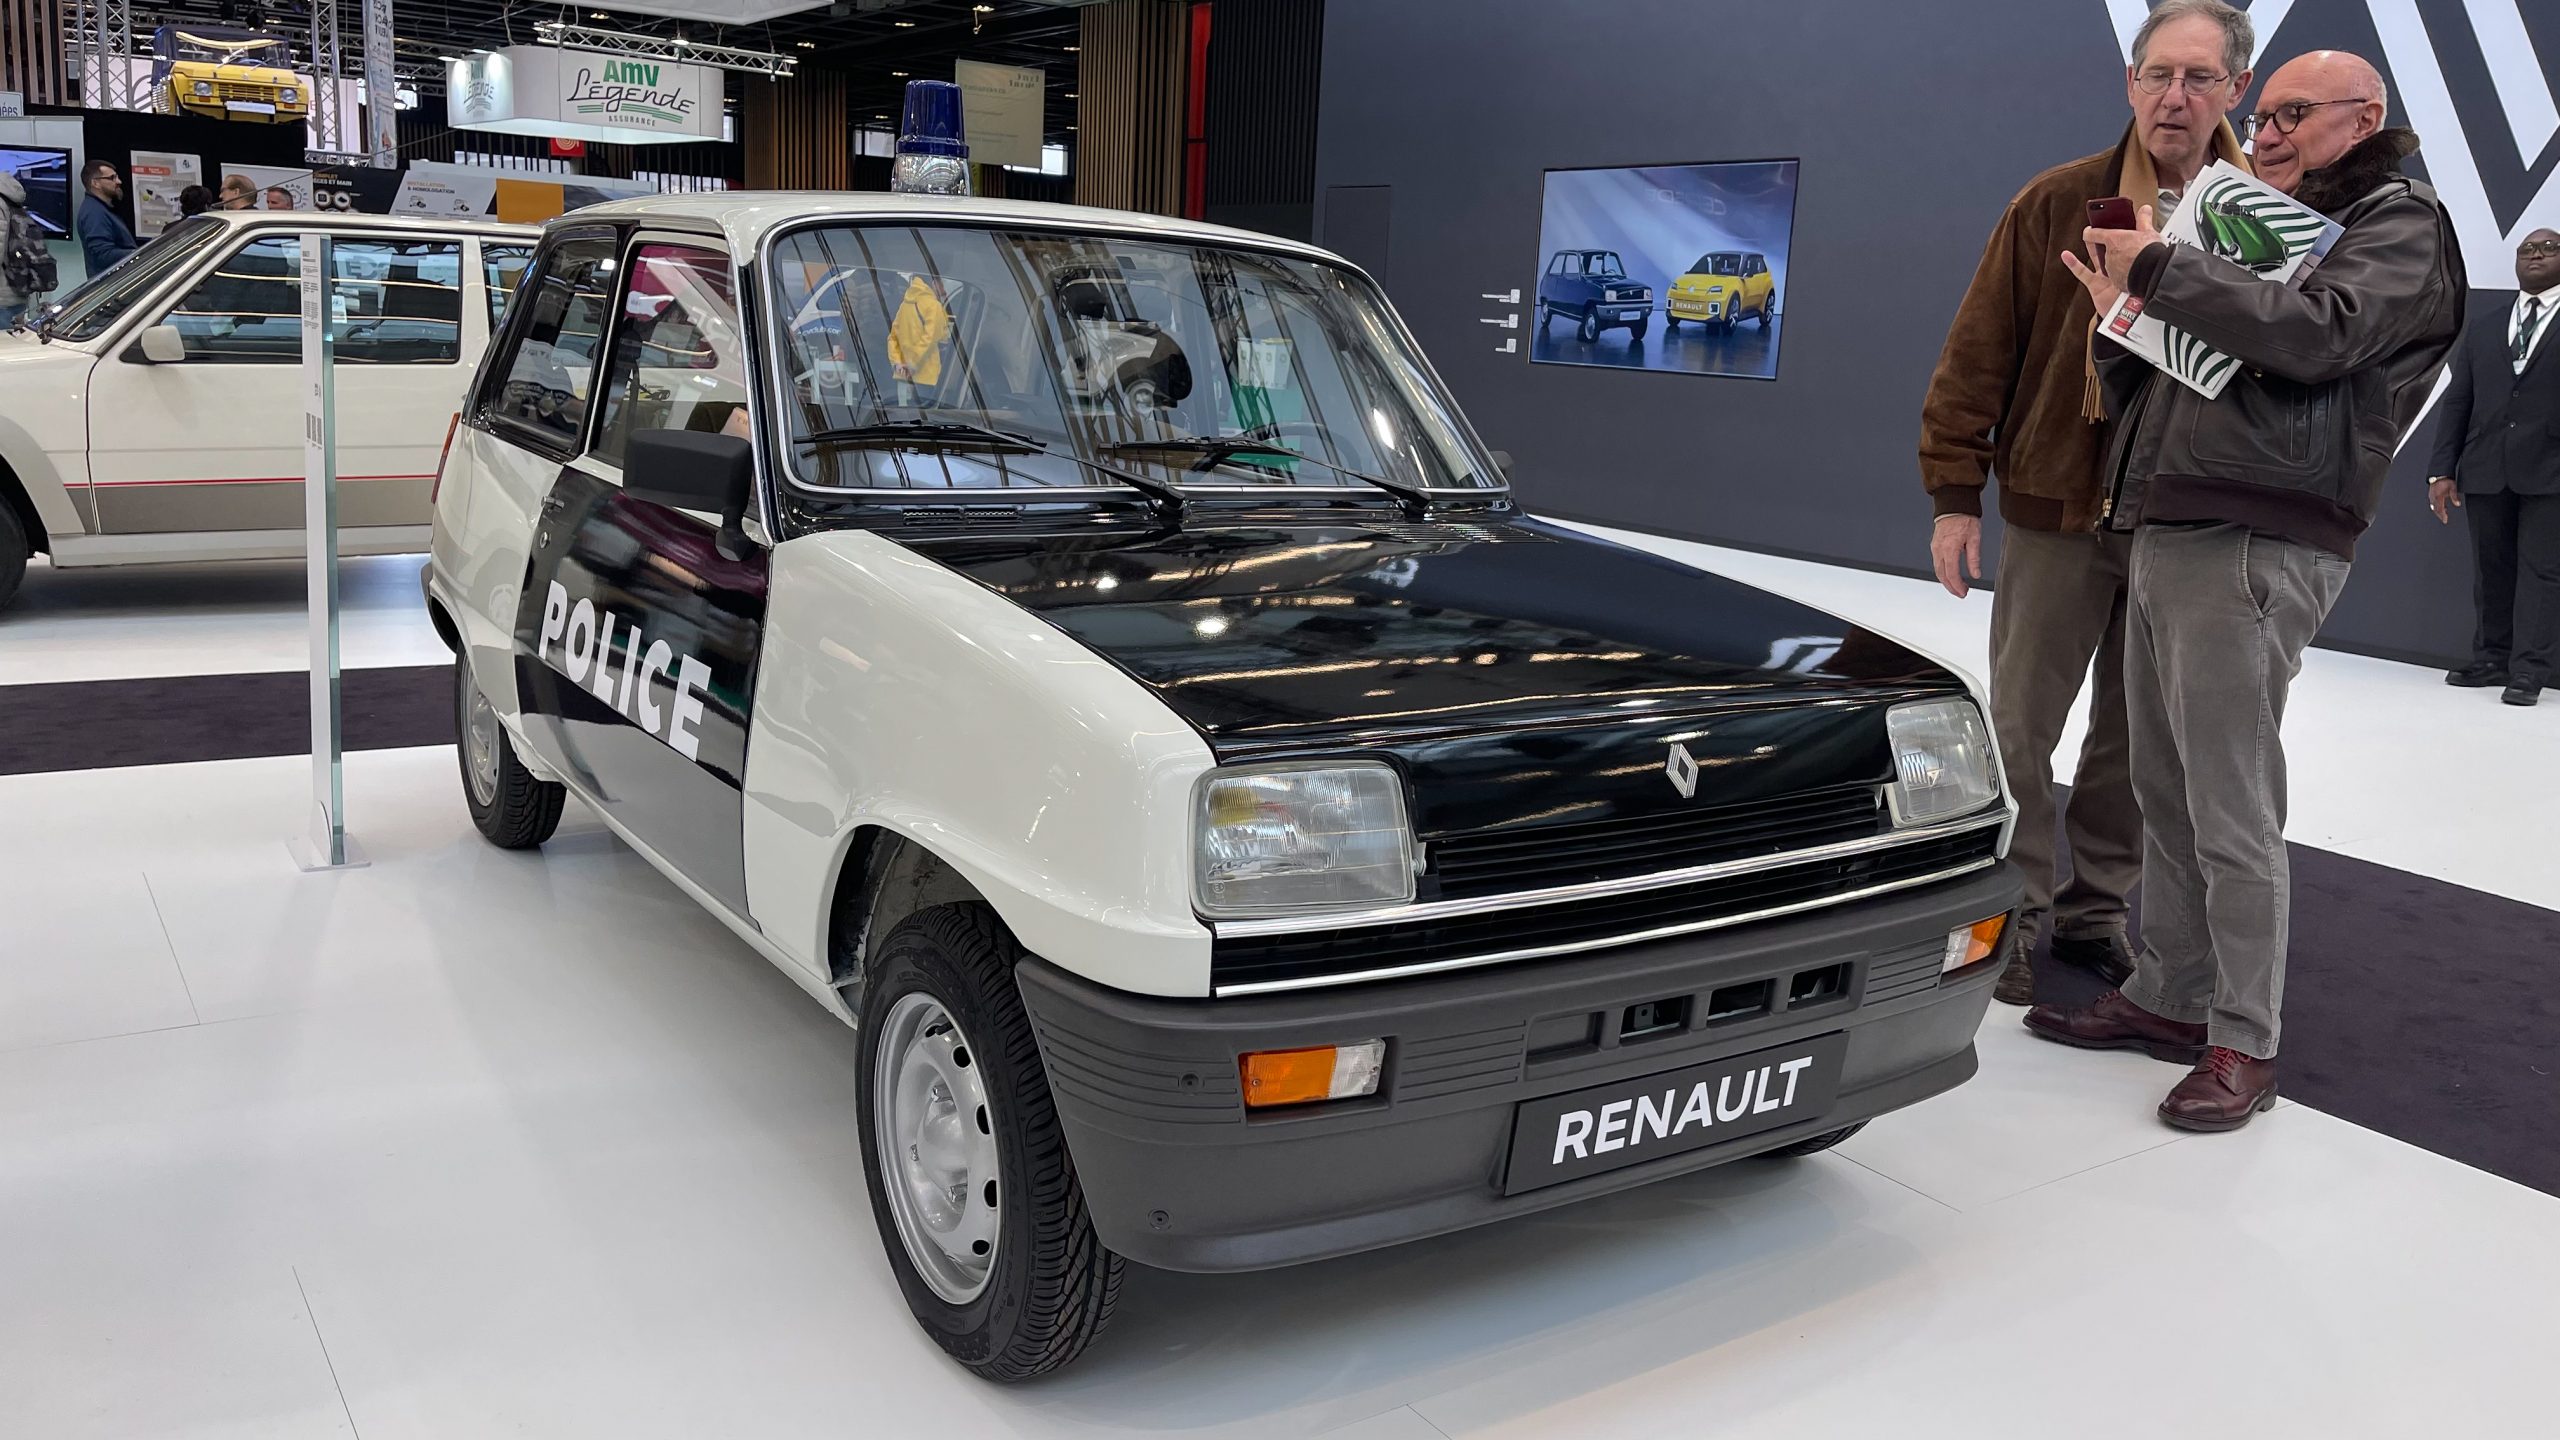 Renault 5 police car